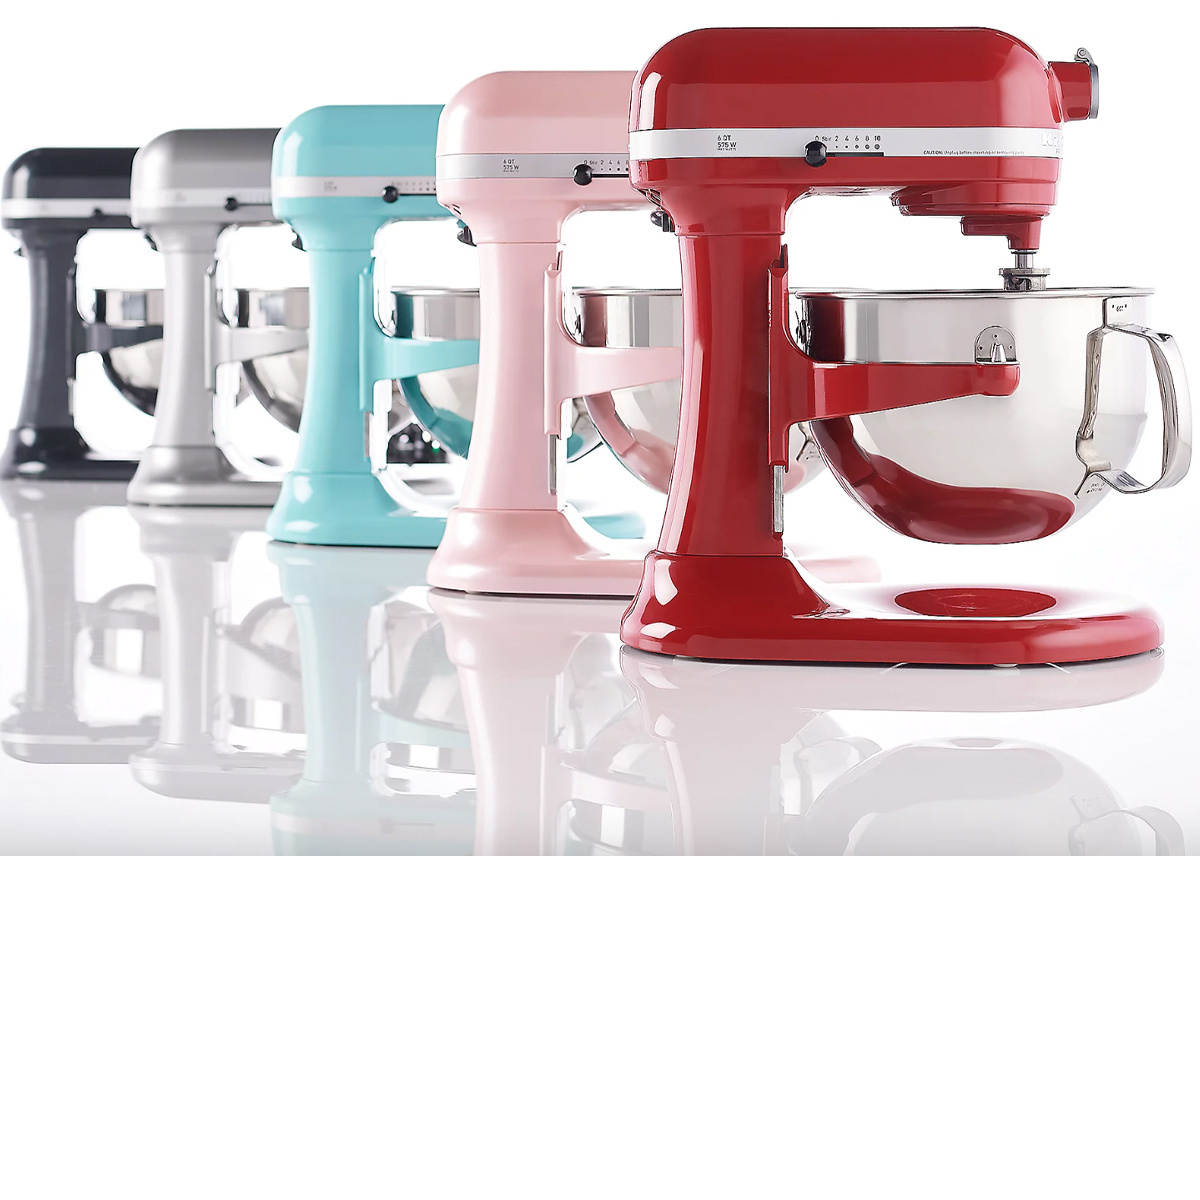 KitchenAid stand mixer sale: Save on the popular kitchen gadget at